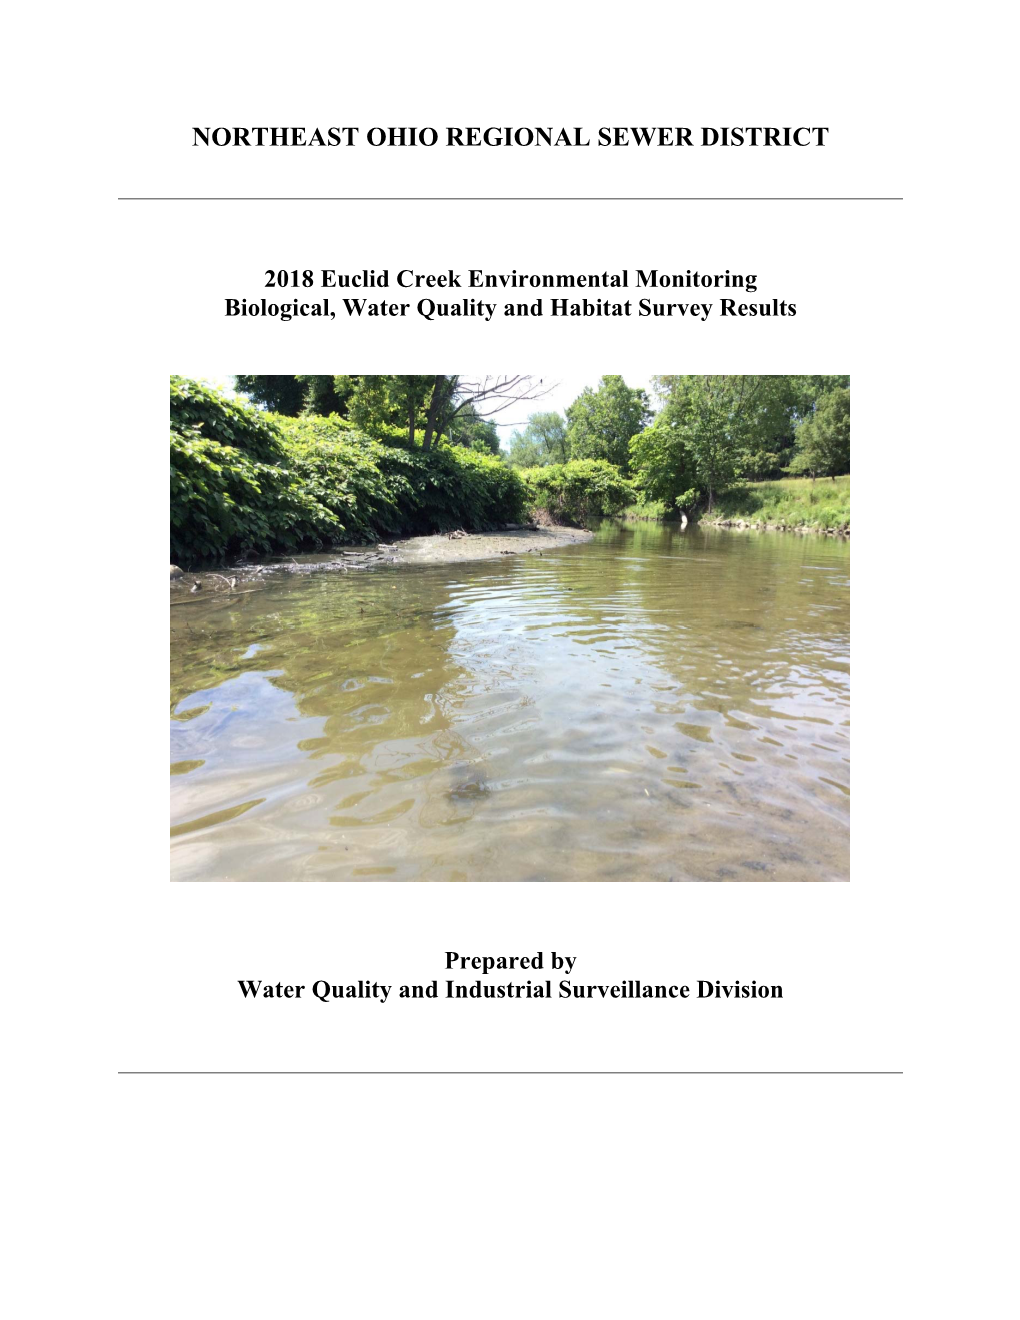 Northeast Ohio Regional Sewer District – Euclid Creek Report